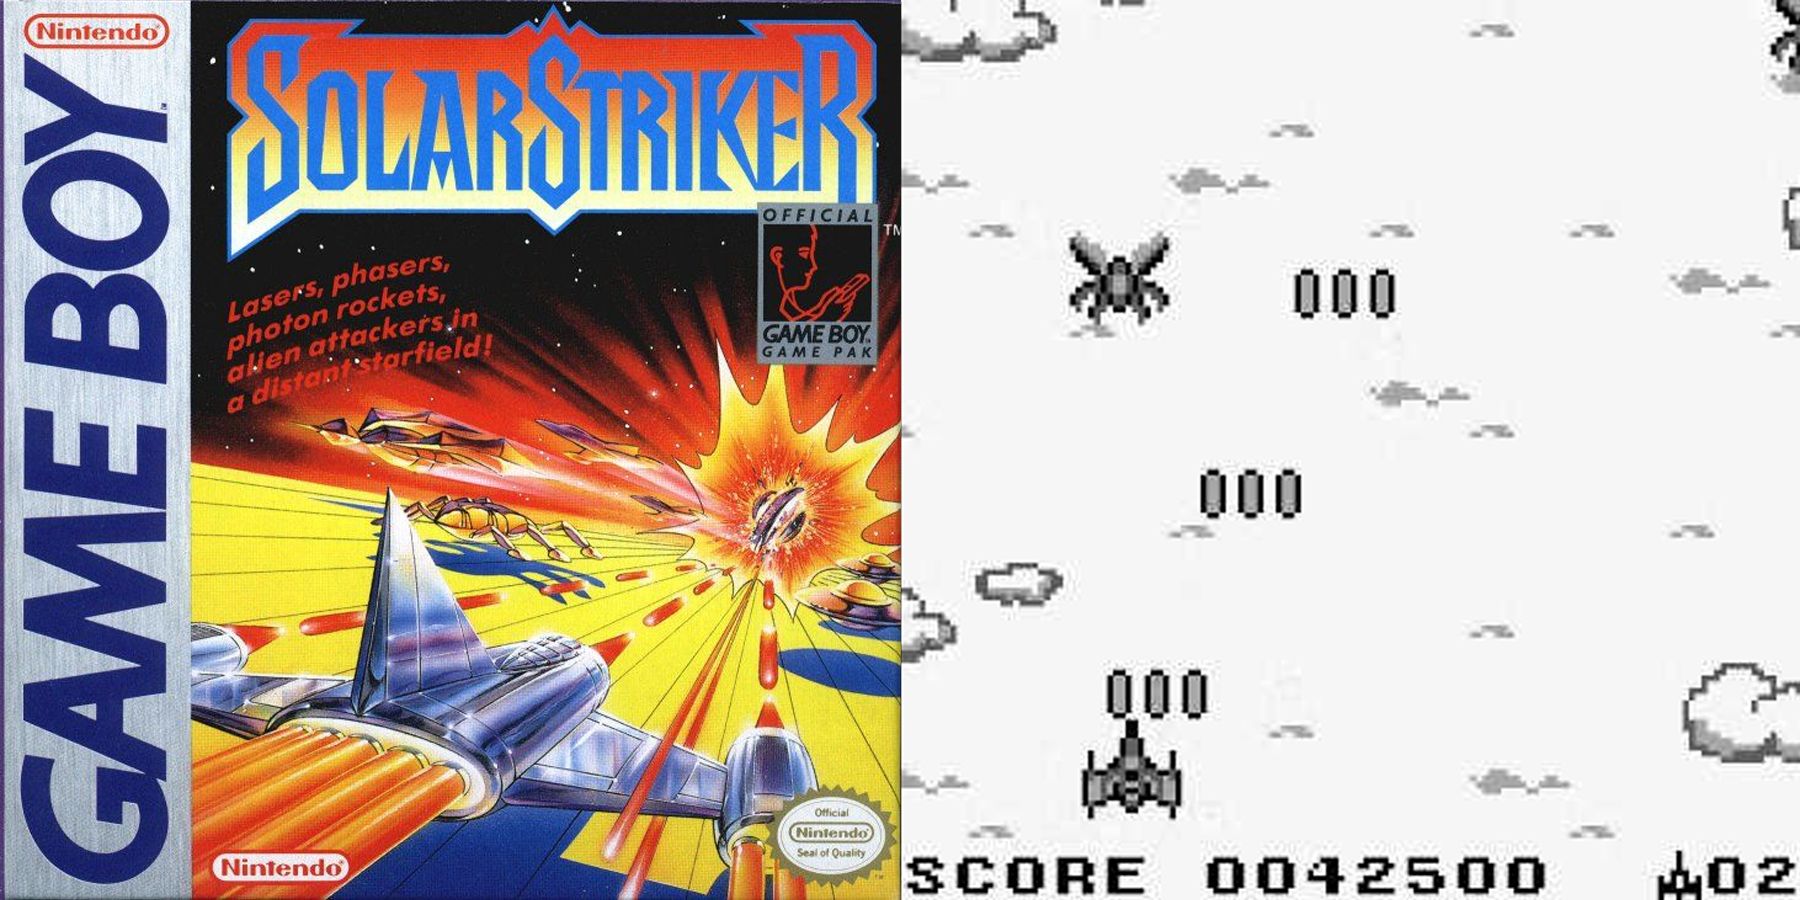 Solar Striker Game Boy cover art and screenshot.